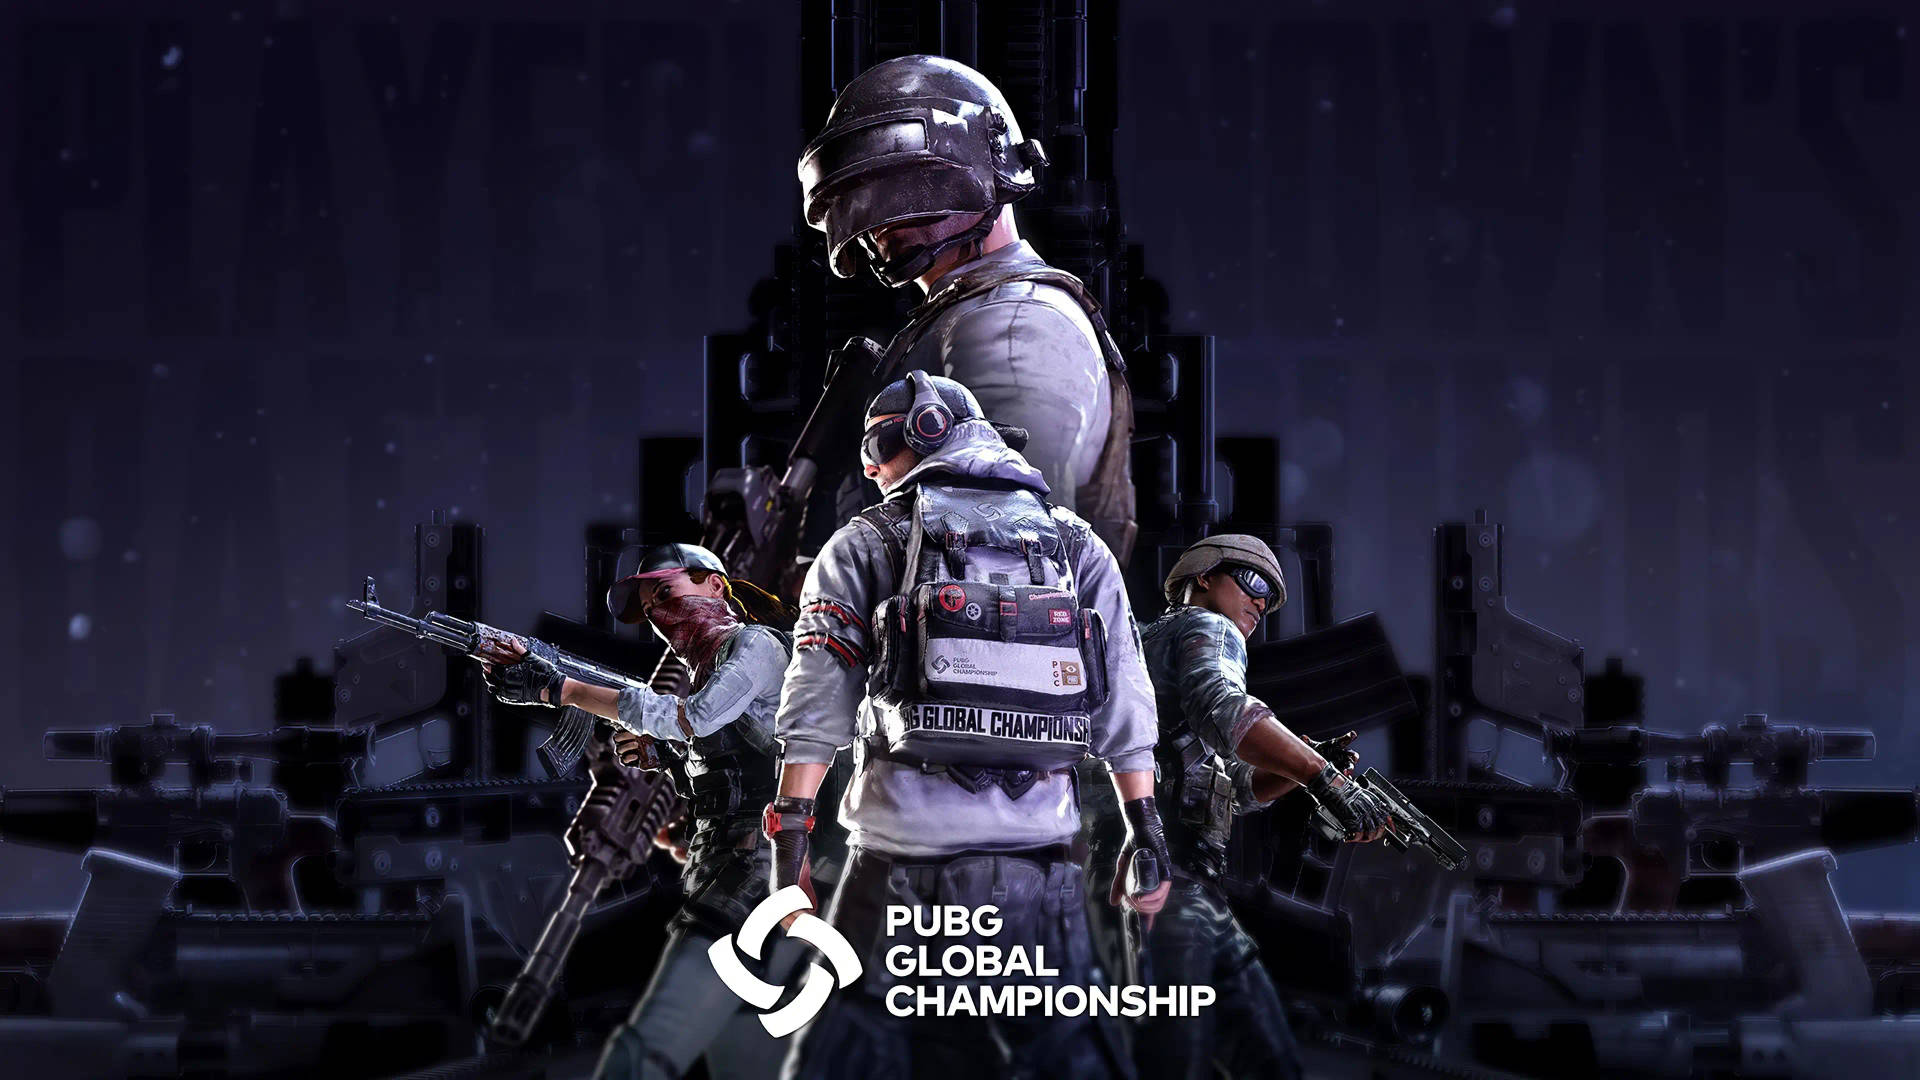 Pubg 1440p Global Championship Poster Wallpaper